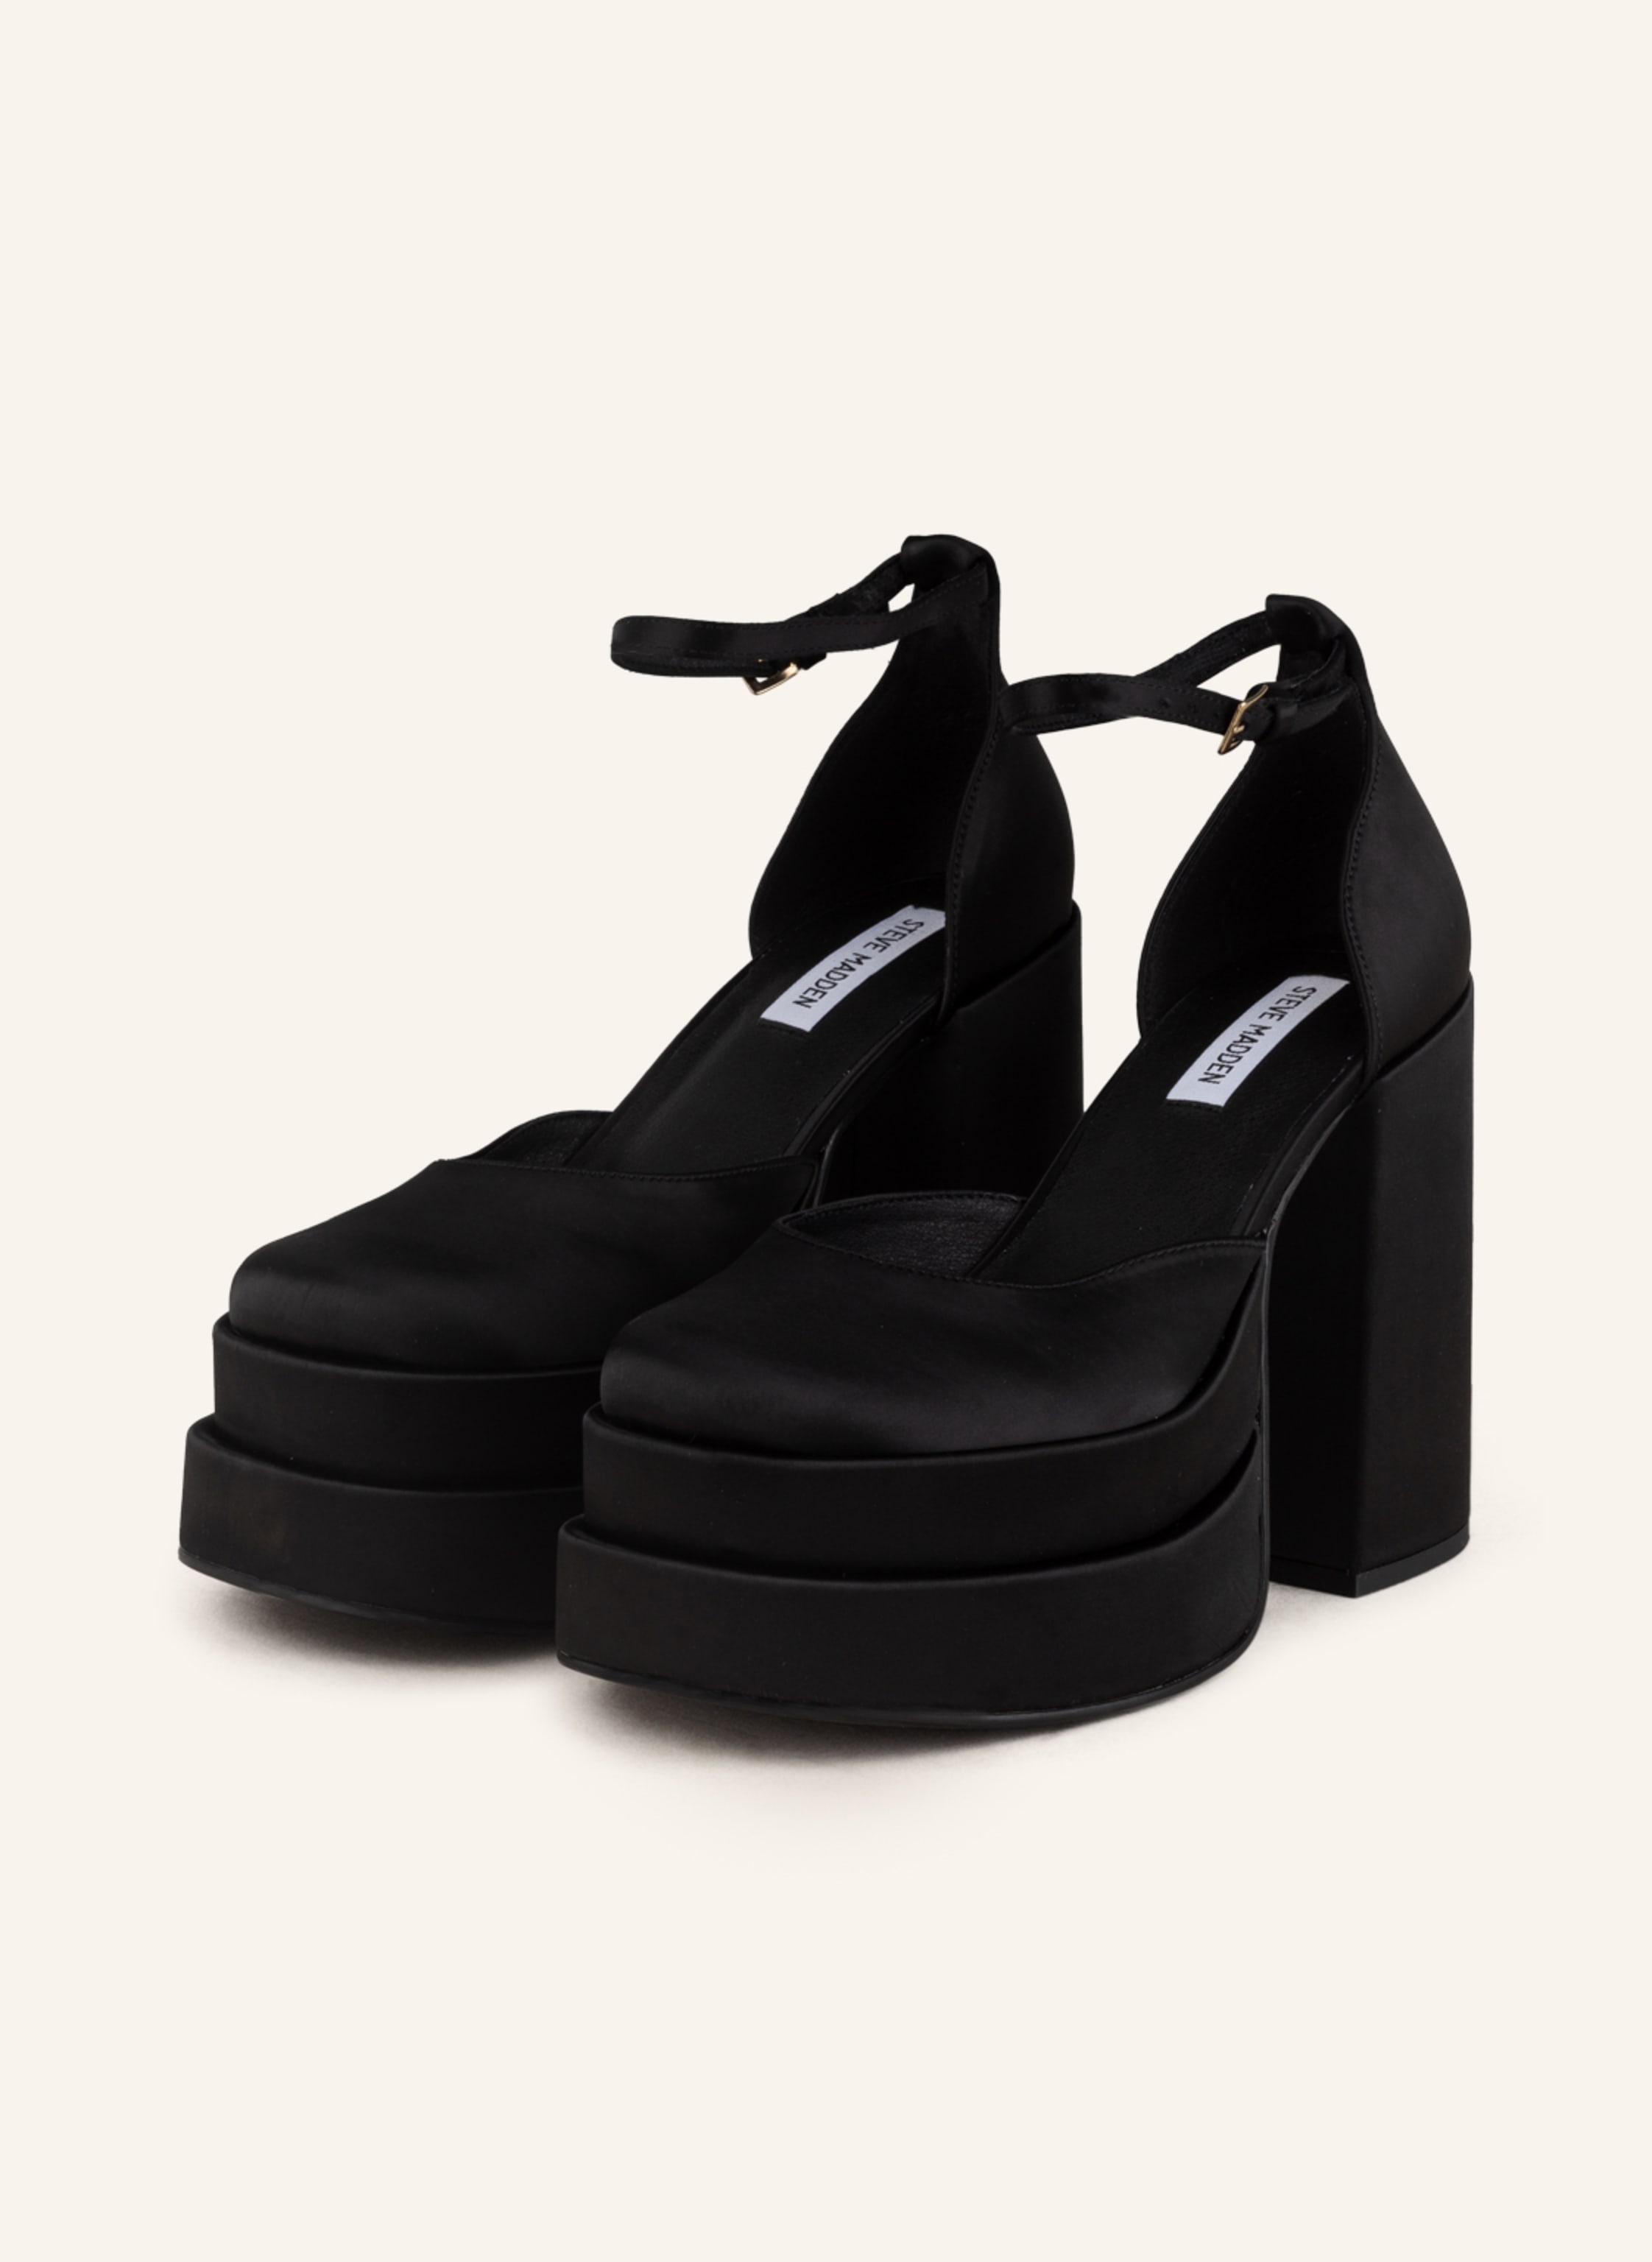 Steve Madden PLATEAUSCHUHE CHARLIZE in Schwarz Damen Schuhe Absätze Schuhe mit Blockabsätzen und Pumps 